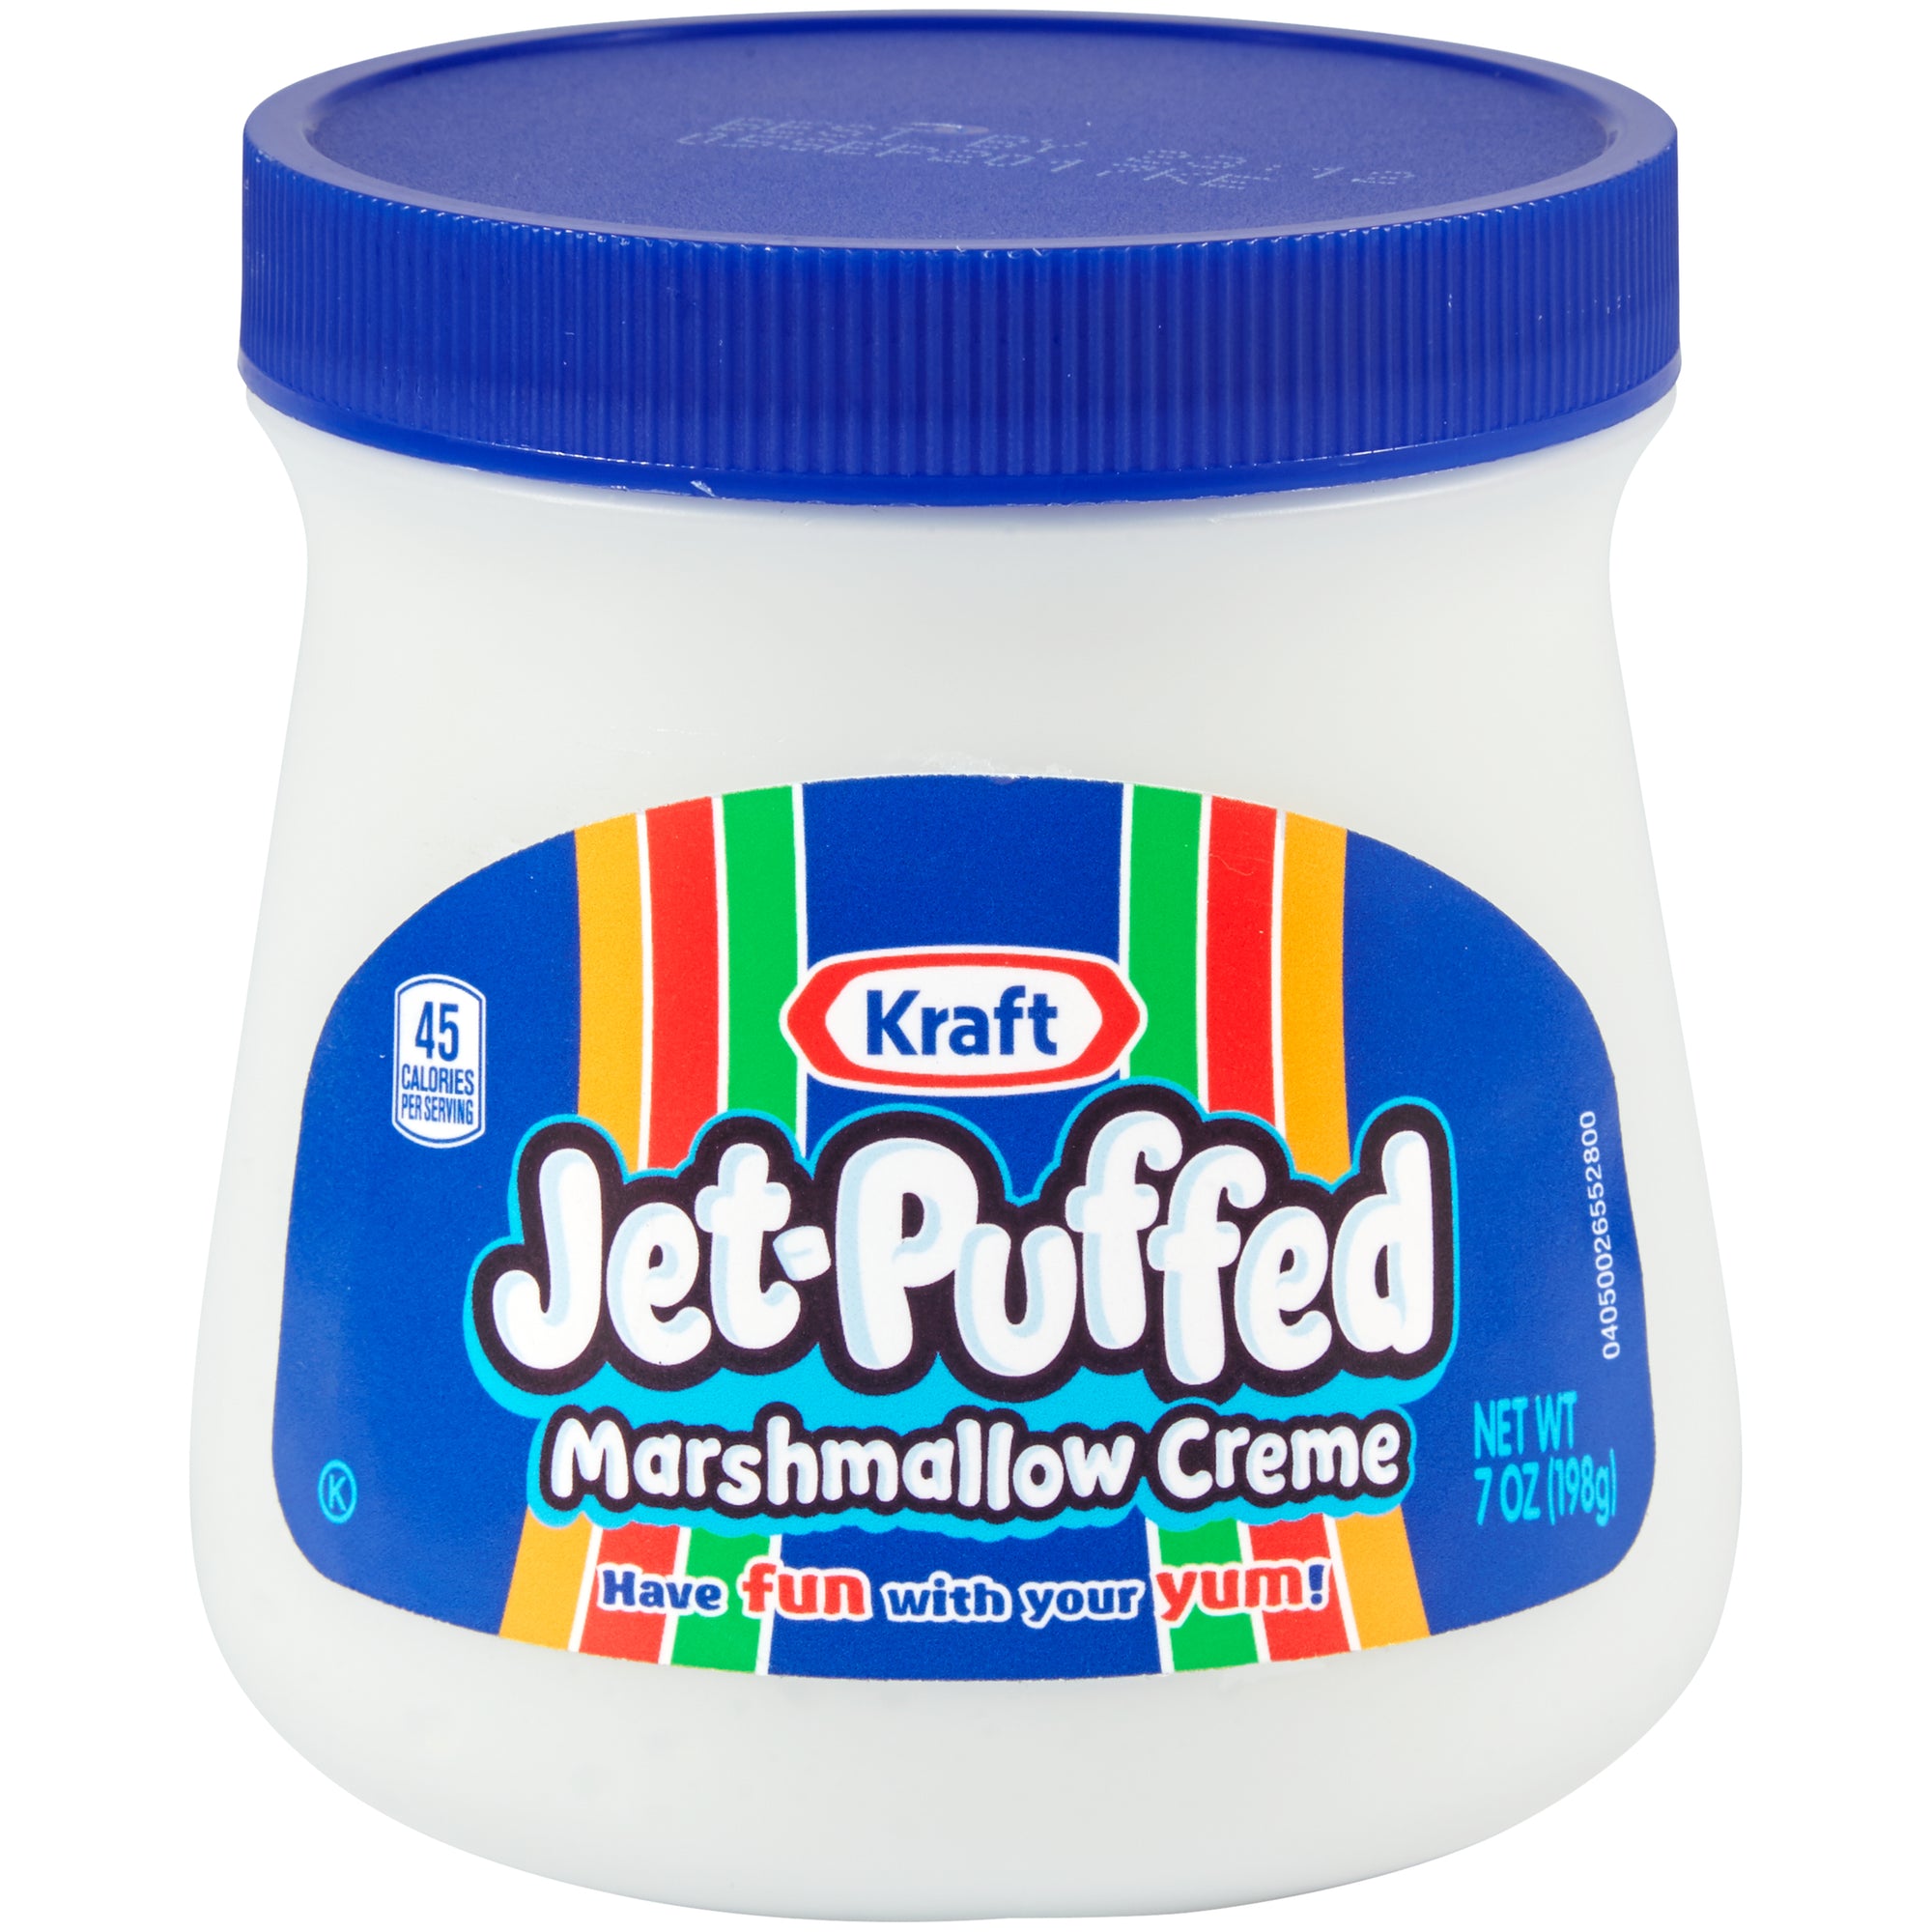 Kraft Marshmallow Creme Jet Puffed 7oz